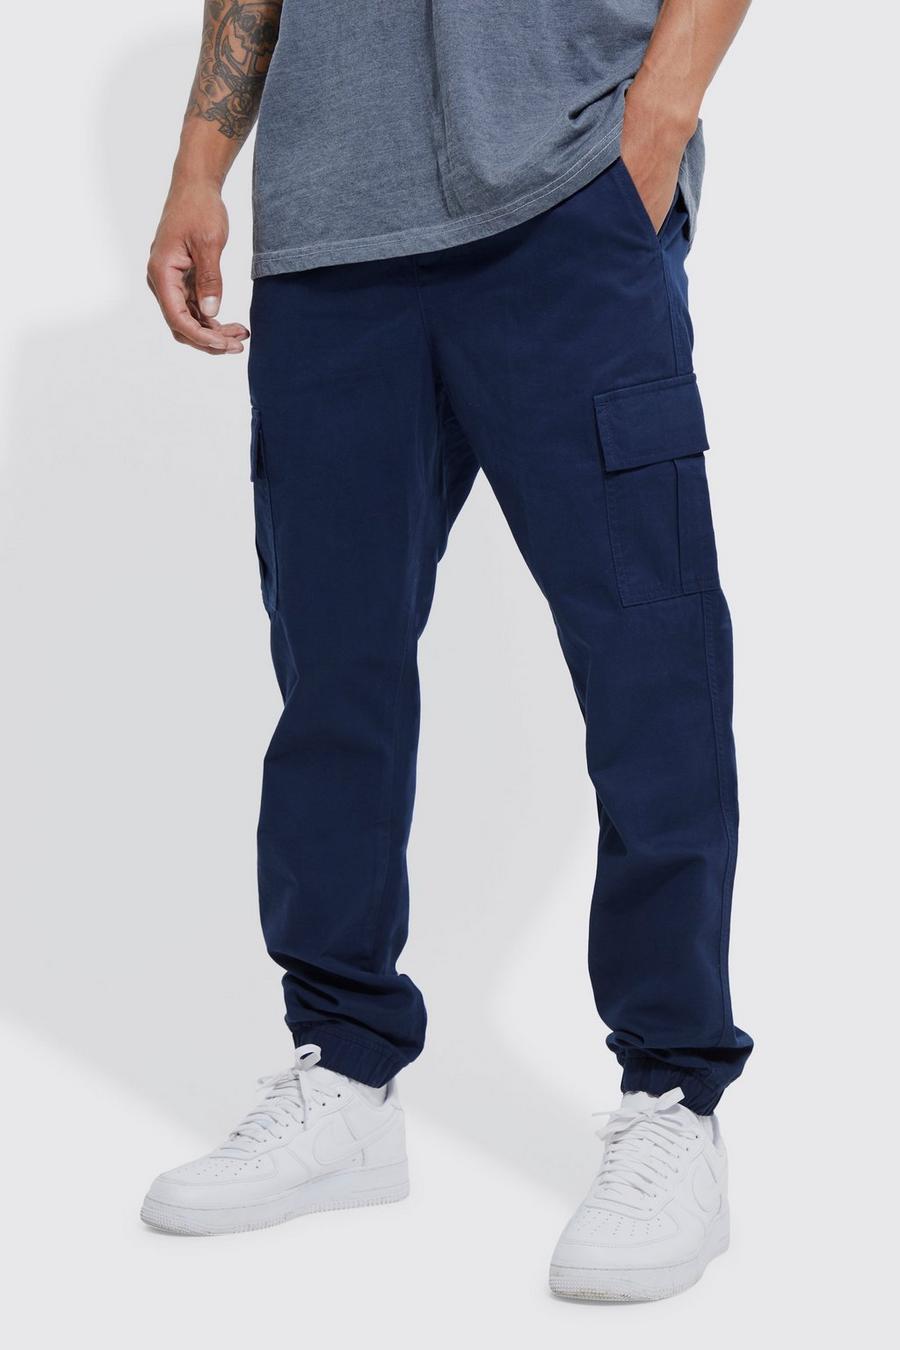 Pantaloni Cargo Regular Fit, Navy azul marino